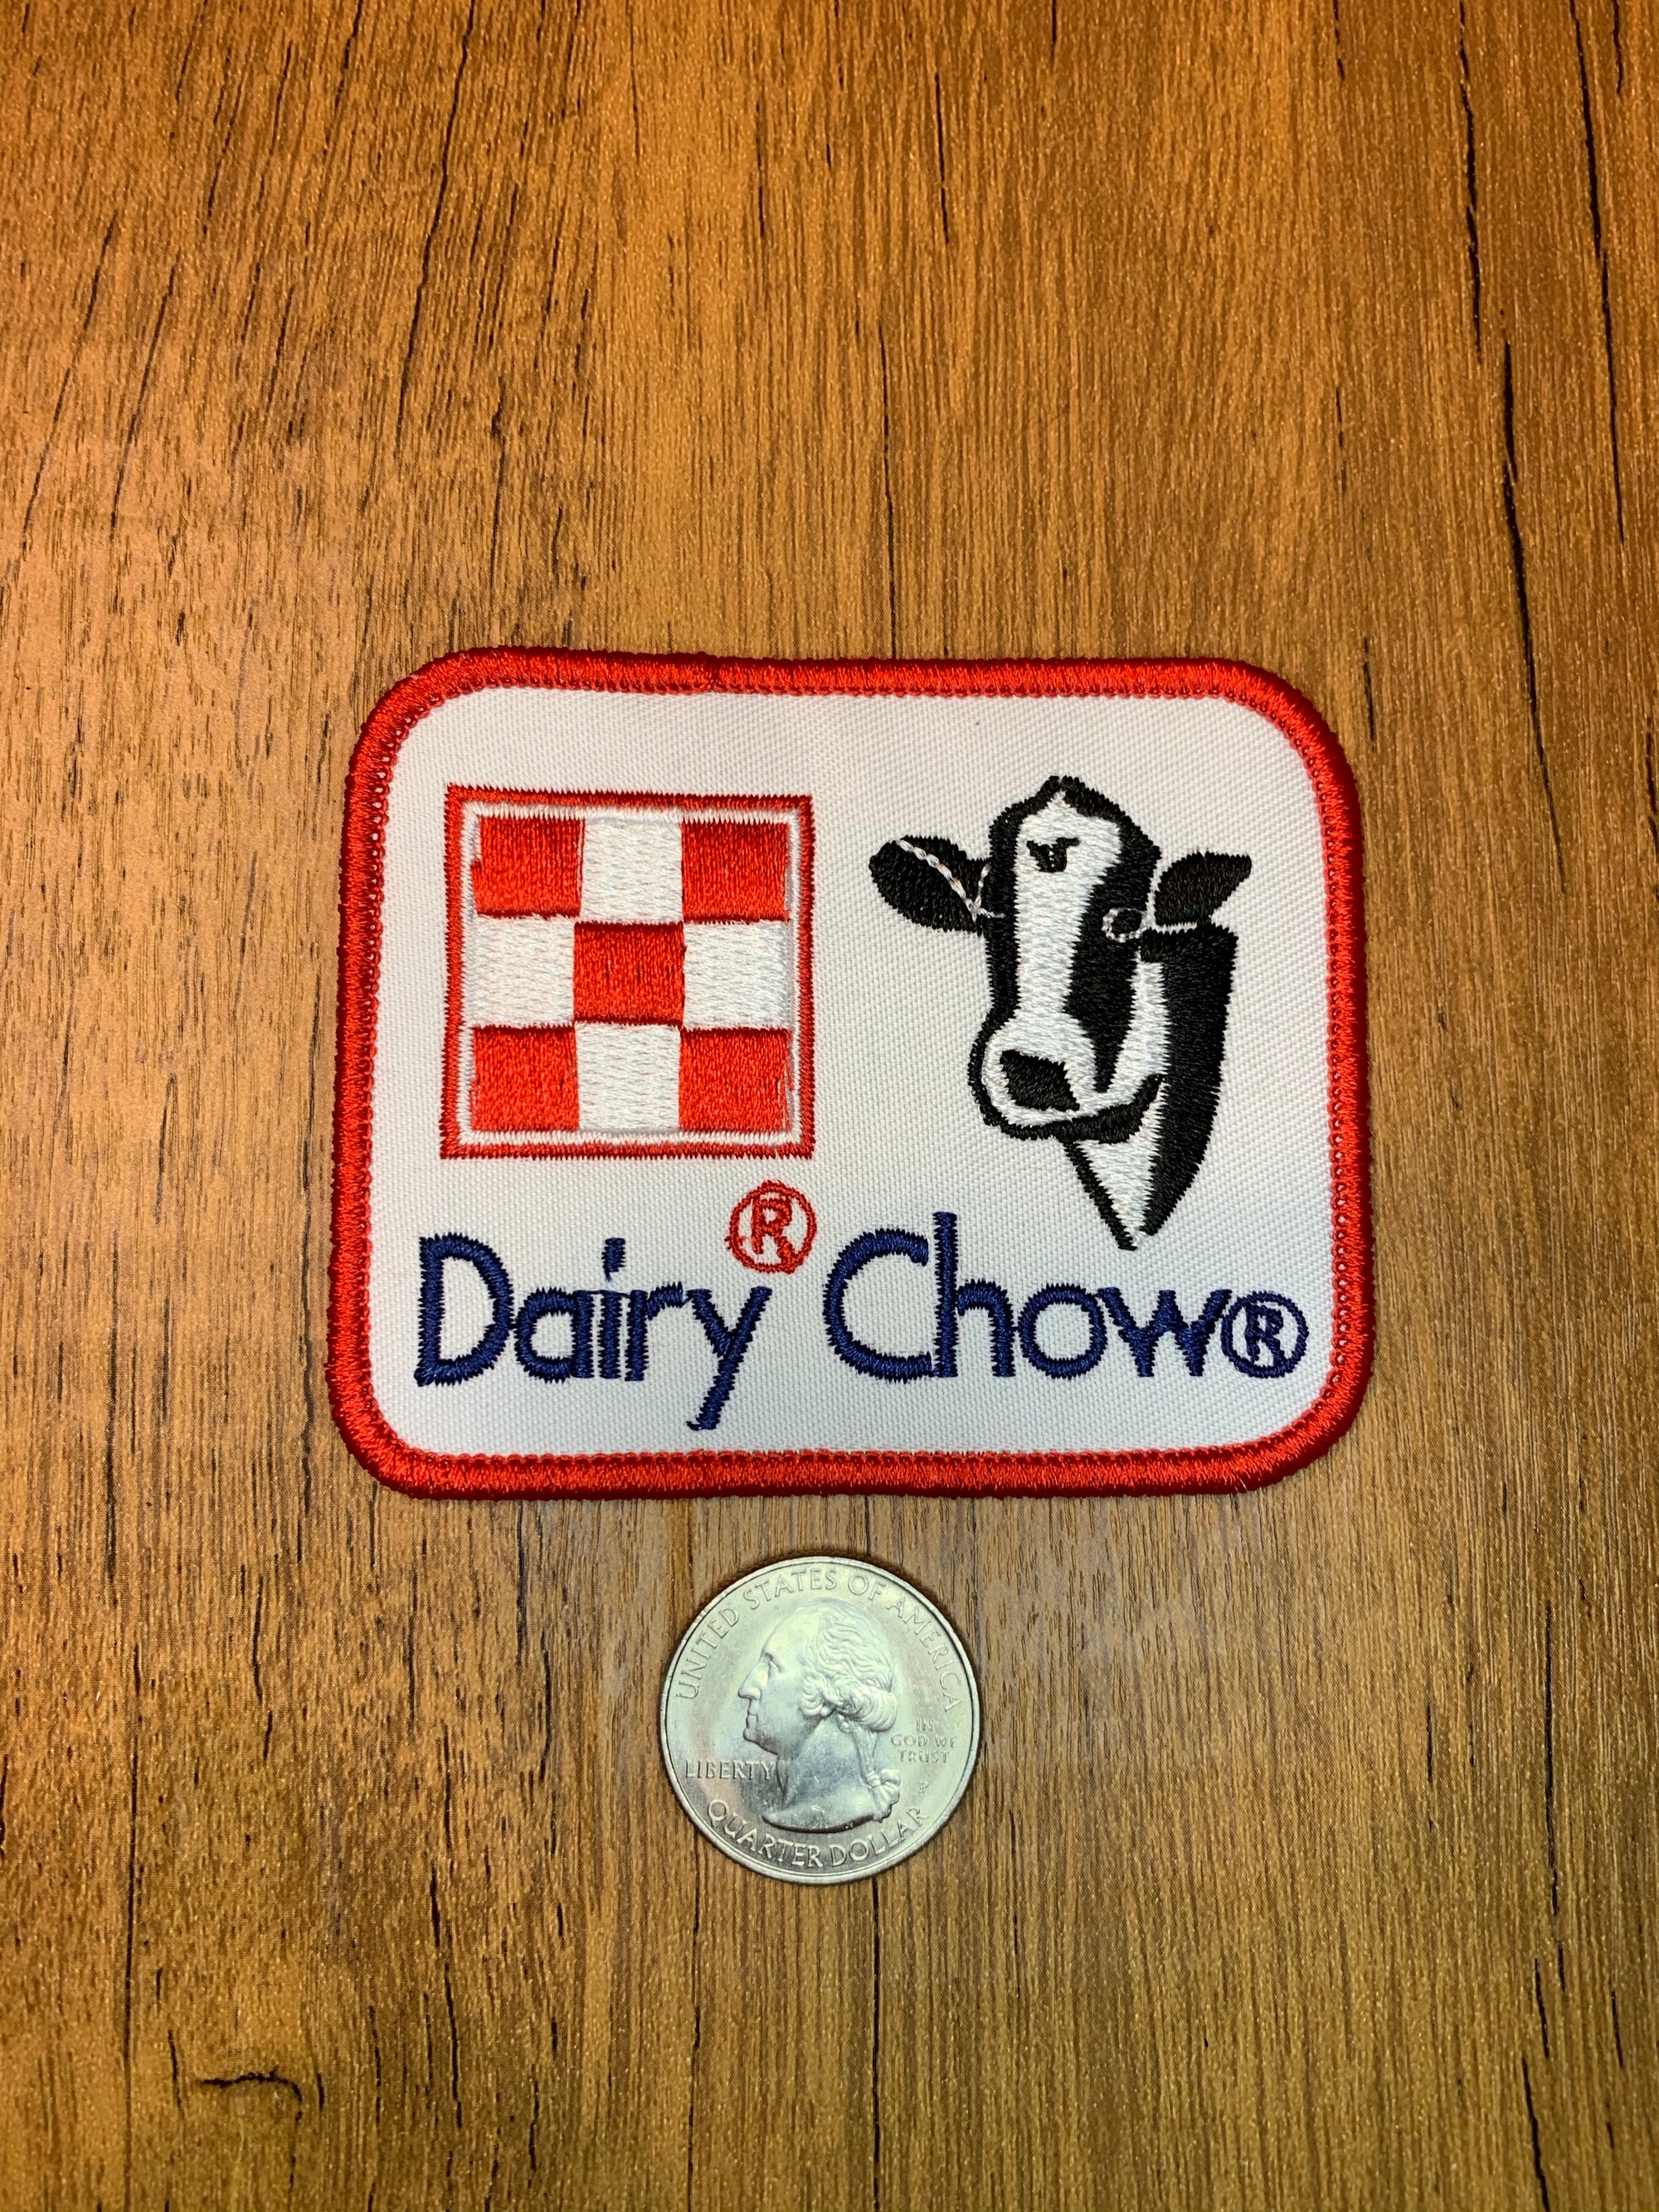 Dairy Chow